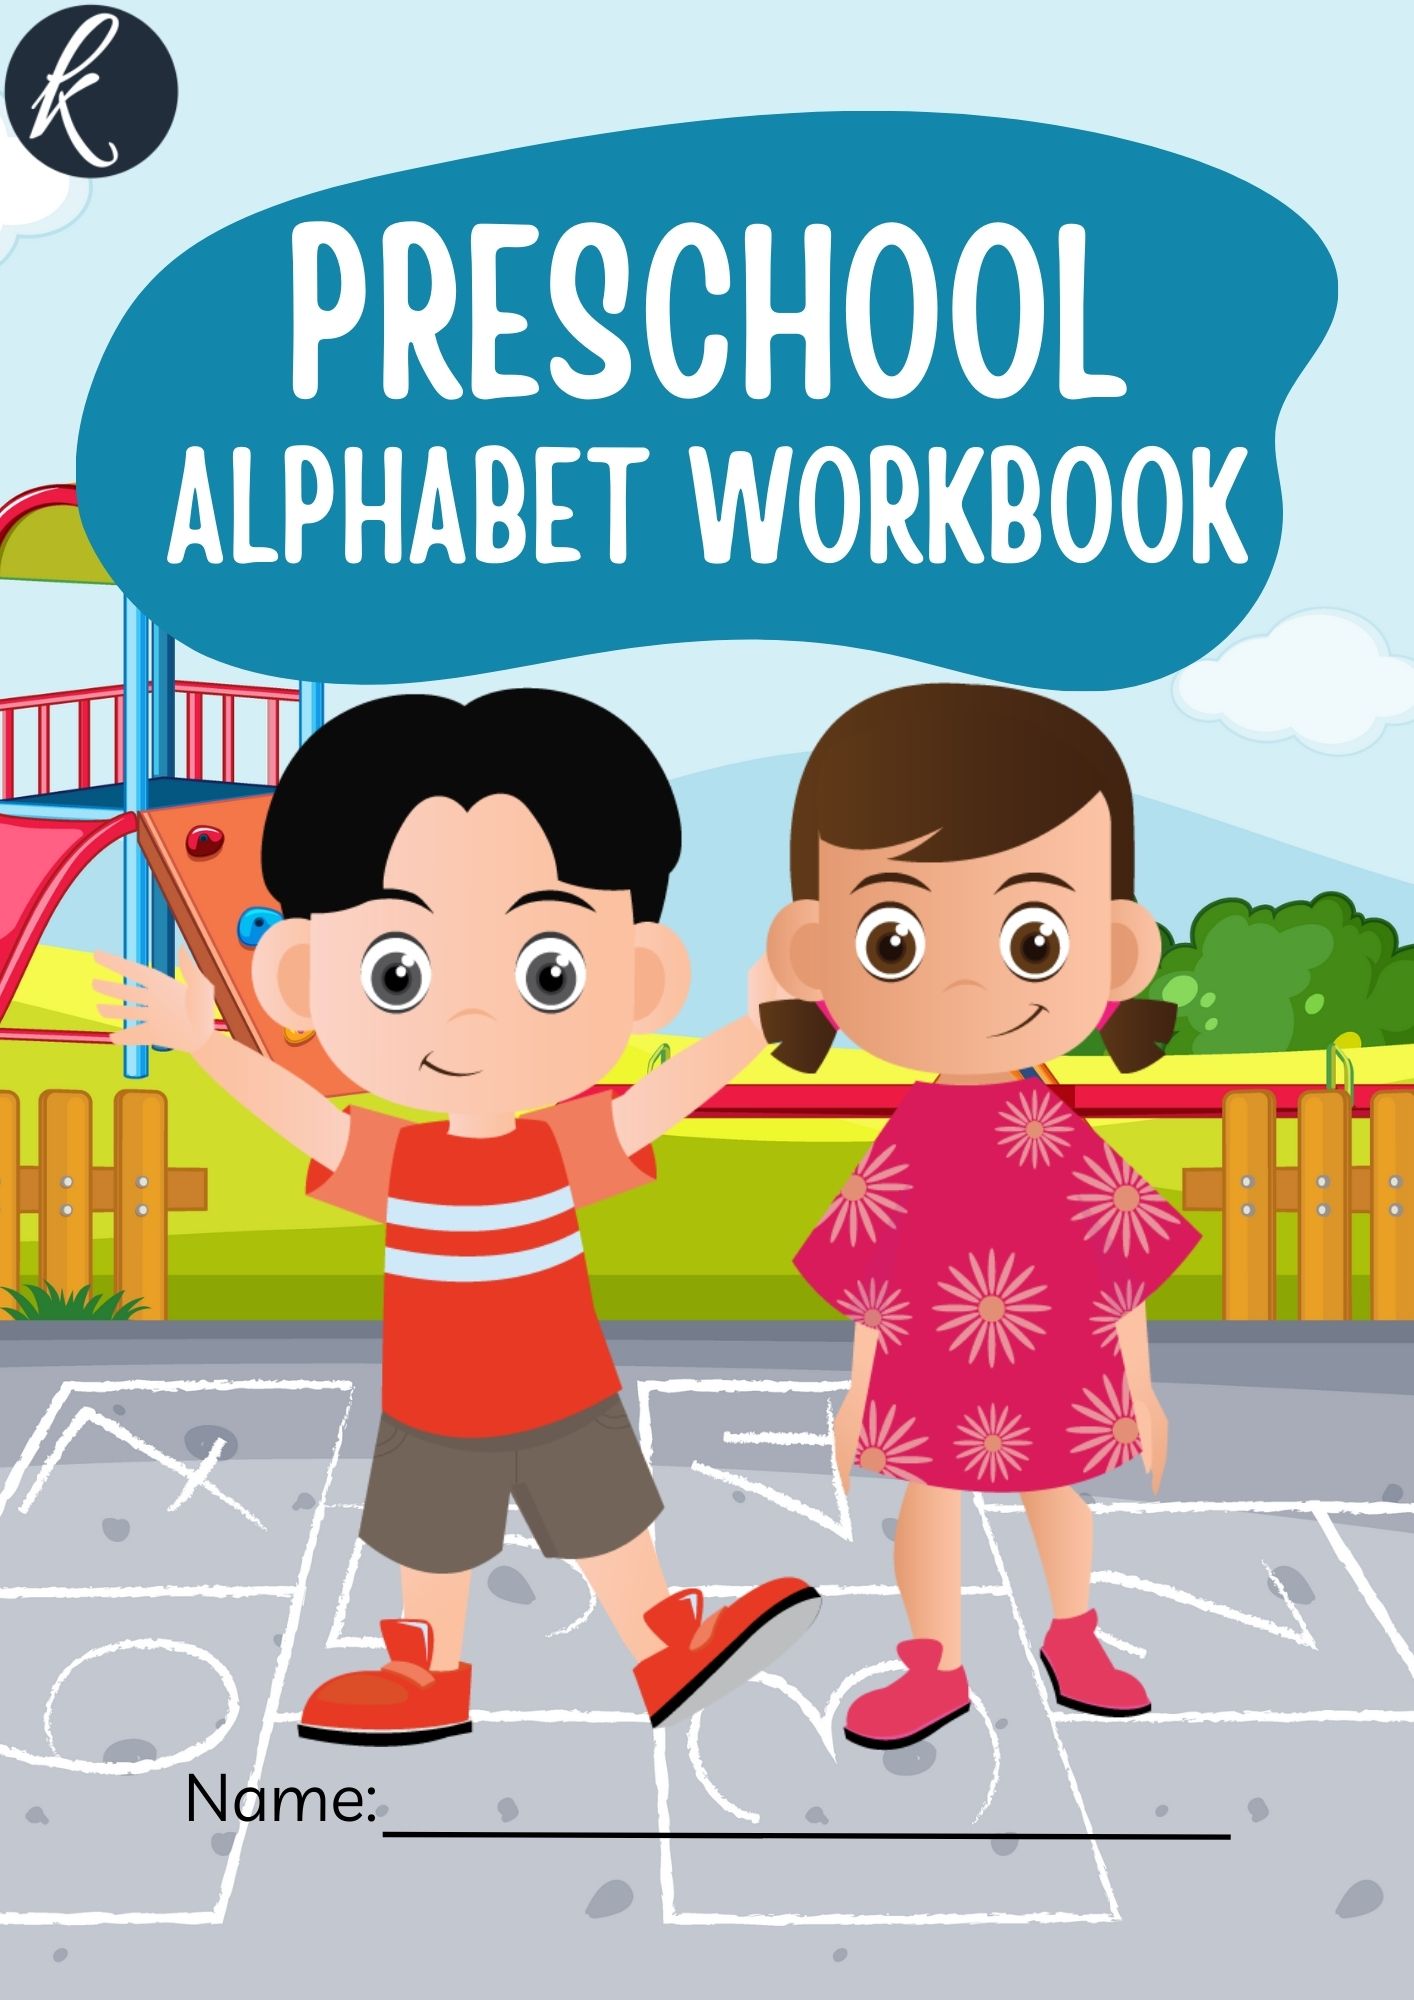 Colorful Preschool Alphabet Workbook cover